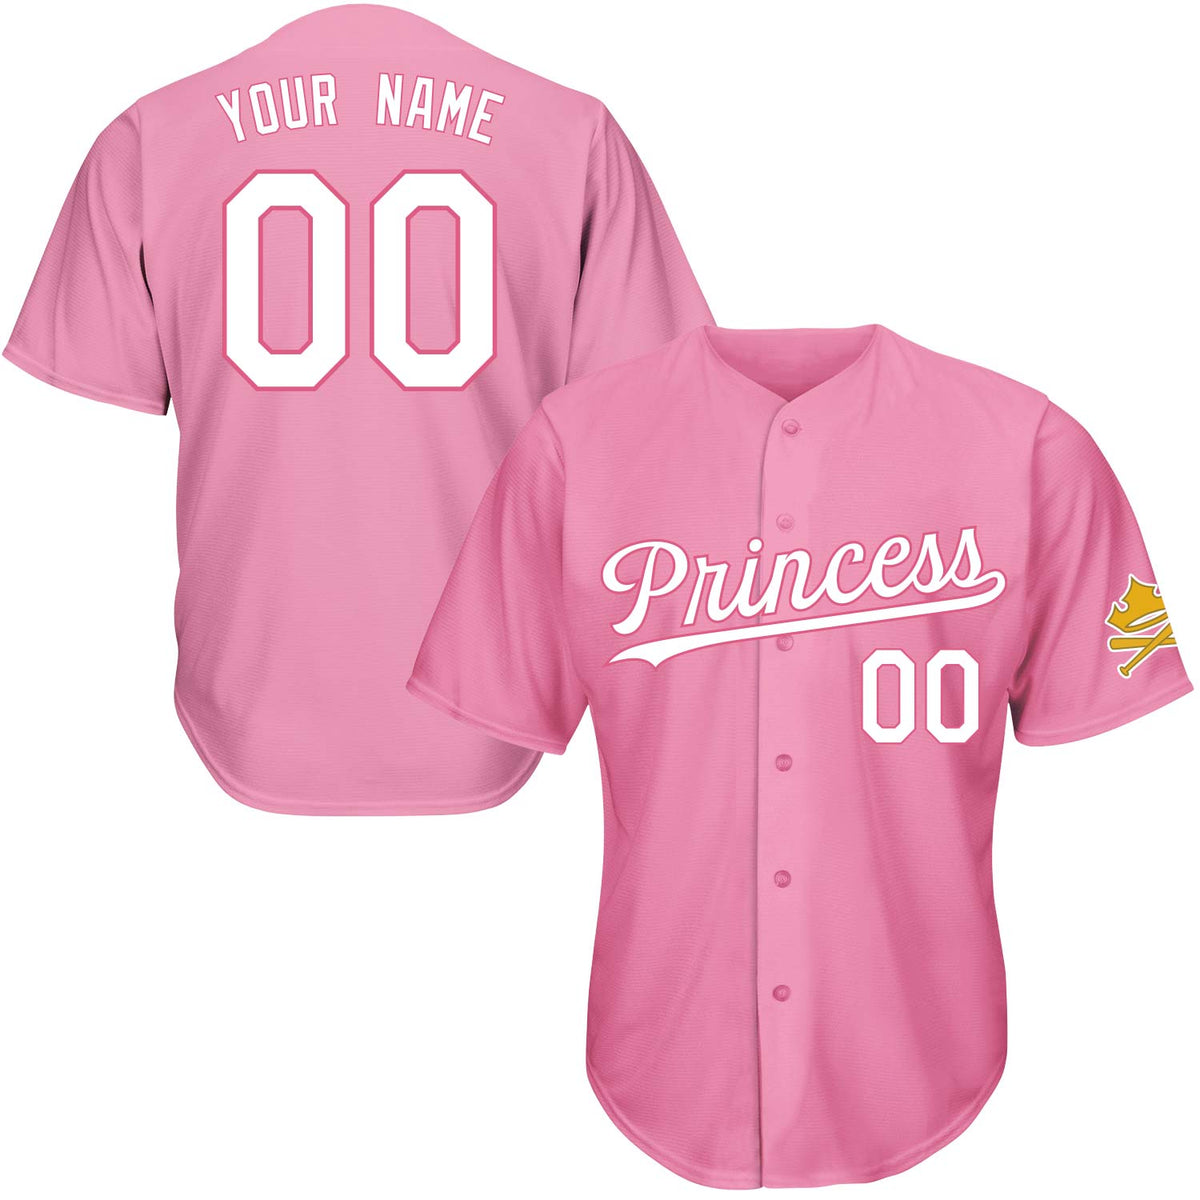 Princess Beauty Sleep Baseball Jersey